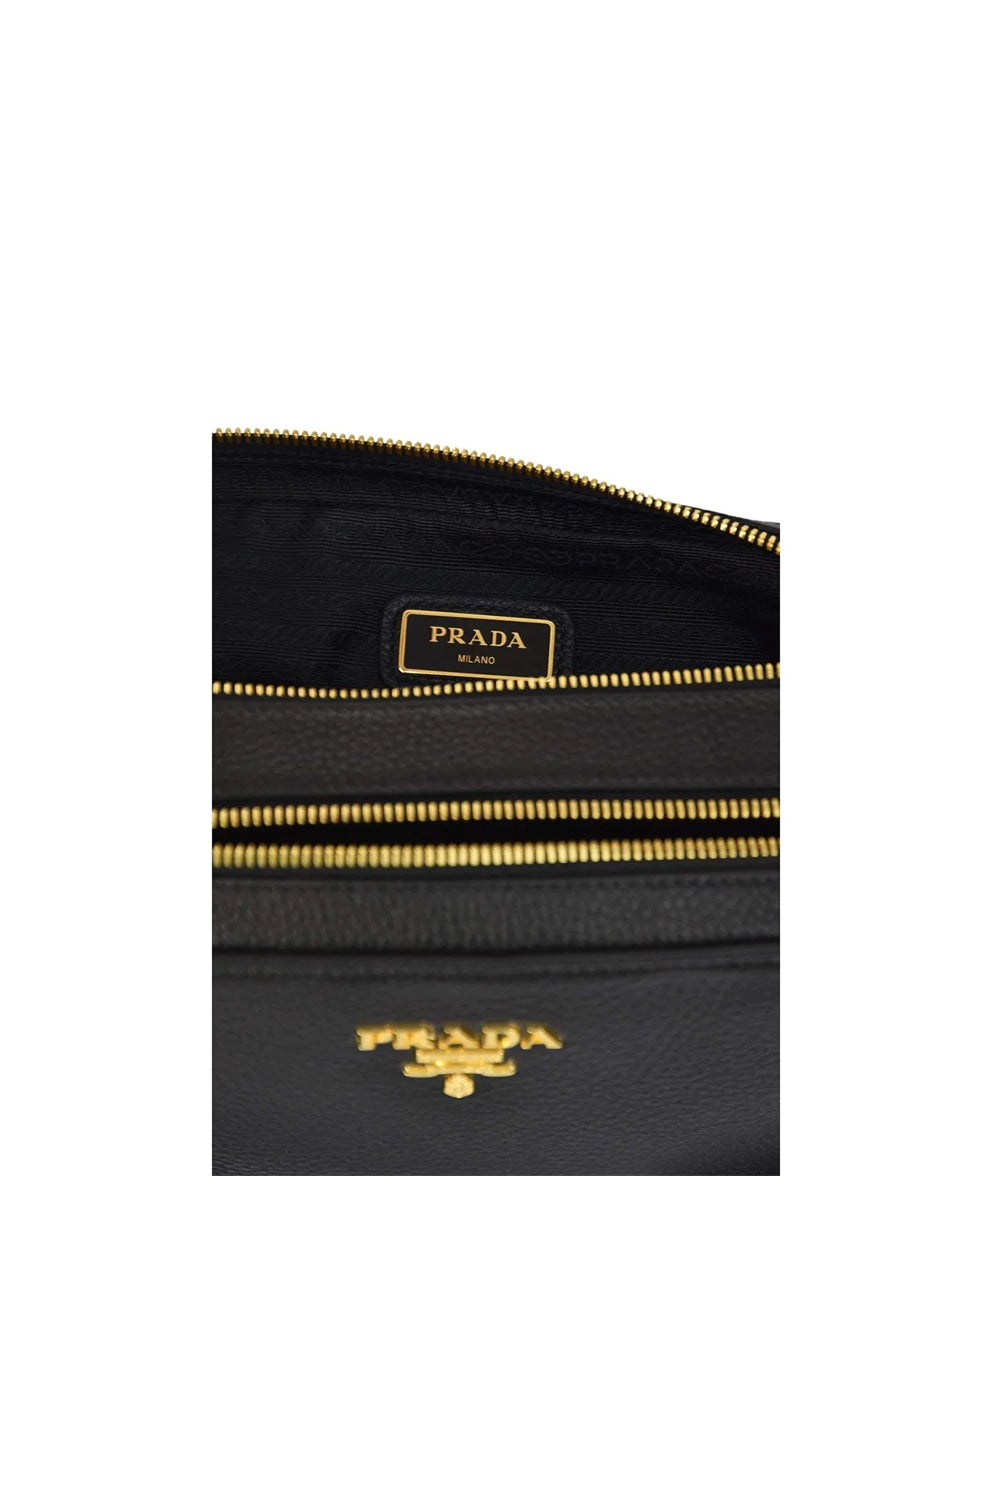 Prada Vitello Phenix Double Zip Crossbody Bag